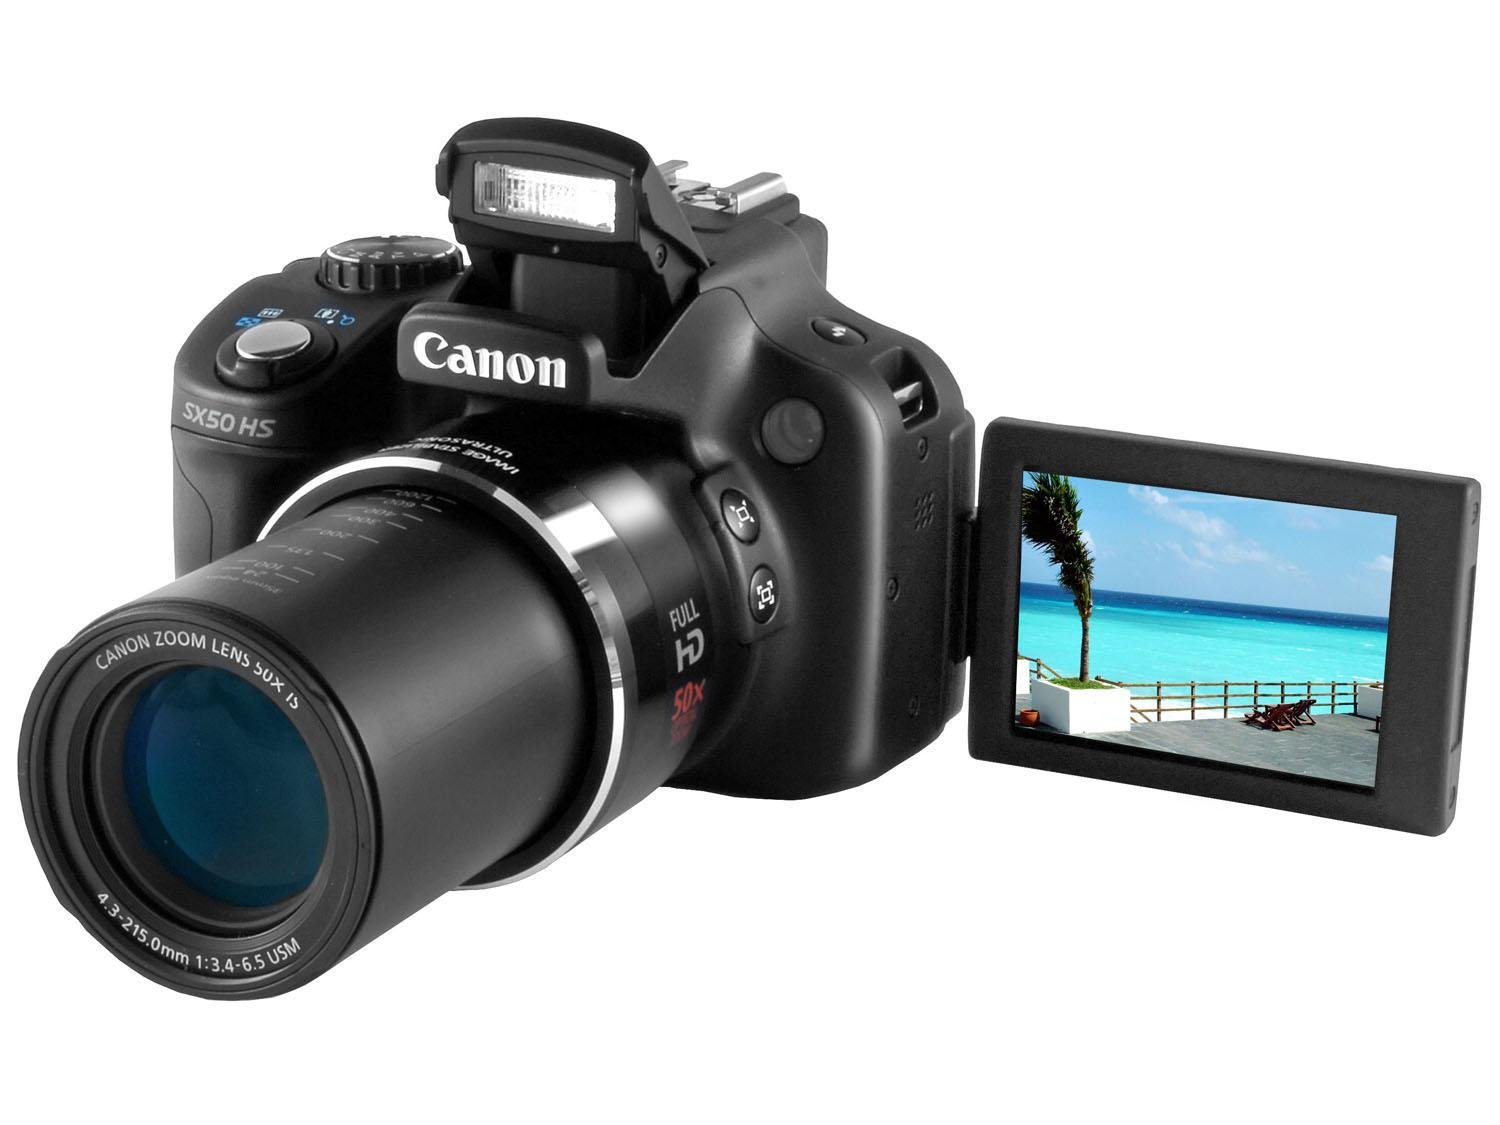 [EXTRA] Câmera Canon SX50, 12.1MP, Zoom Óptico 50x, FullHD - R$ 849,15